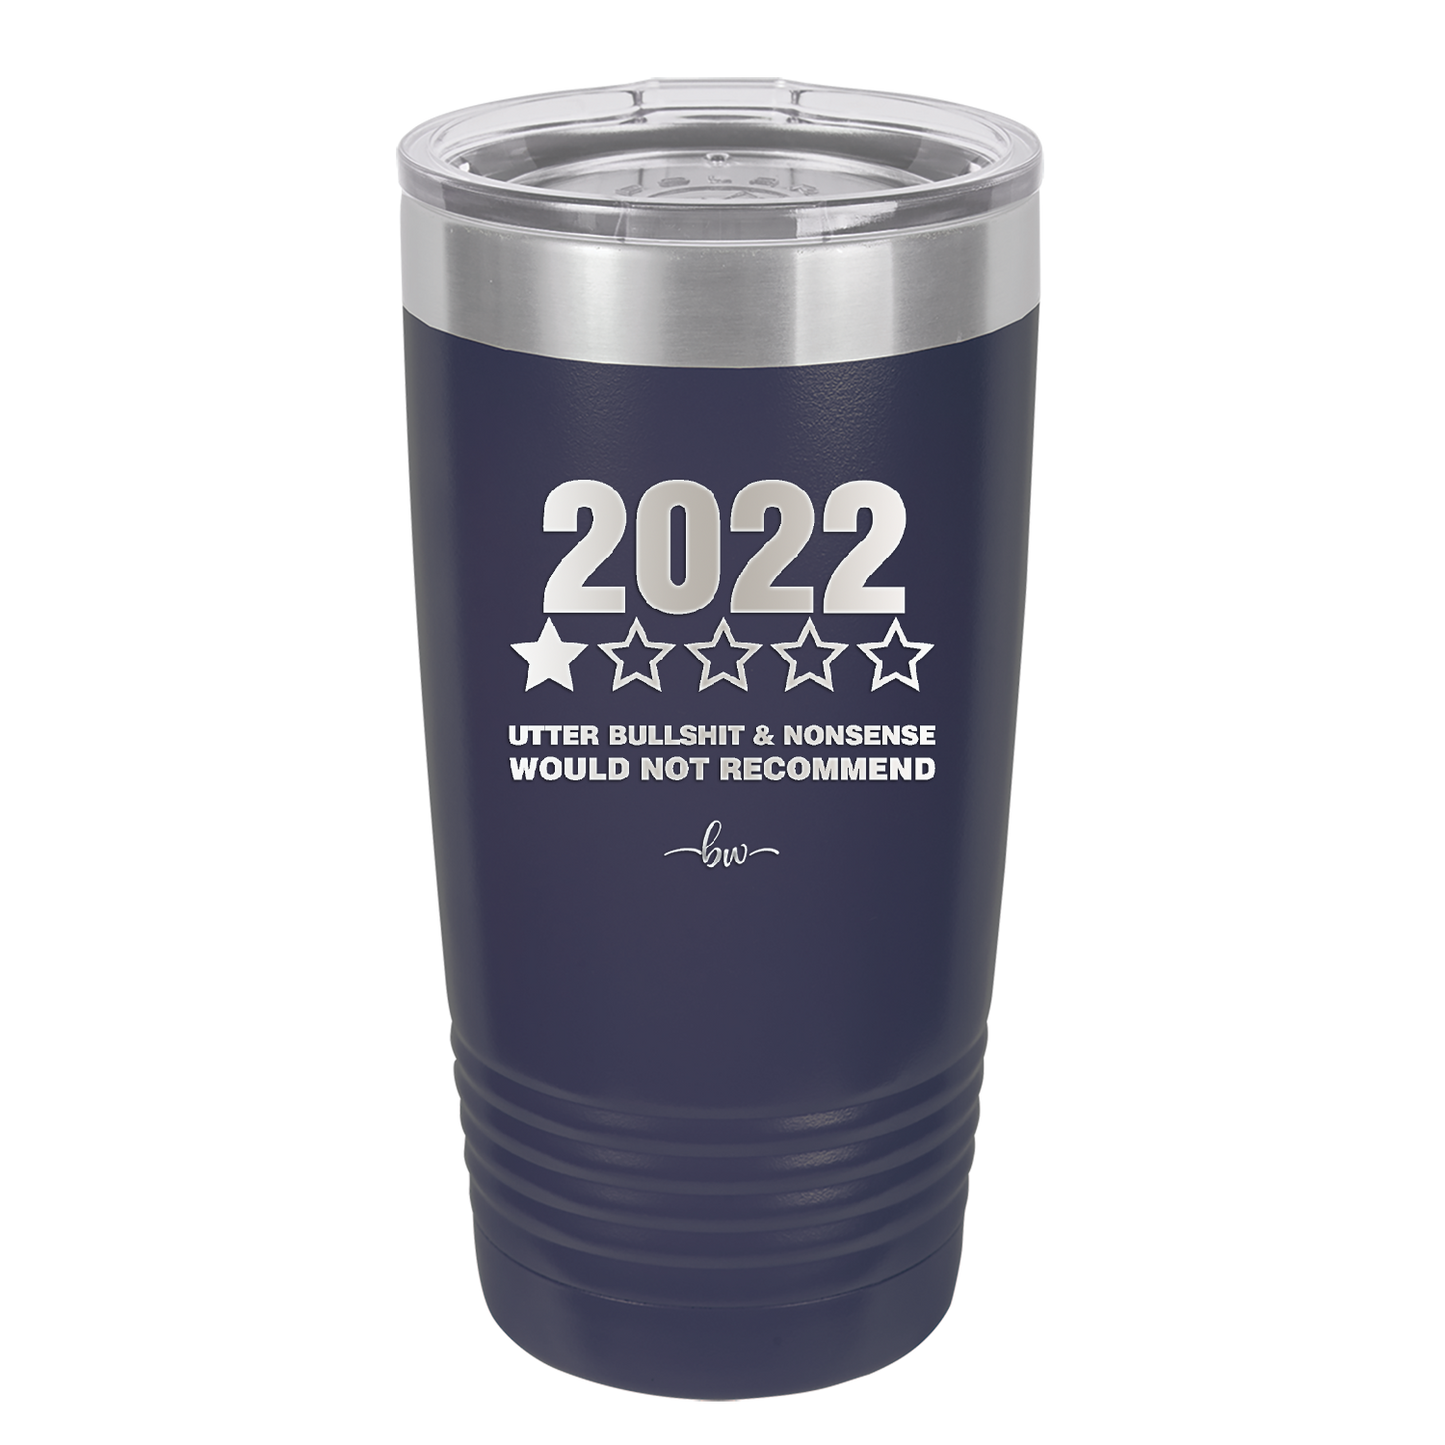 20 oz  2022 utter bullshitt and nonsense would not recommend - navy